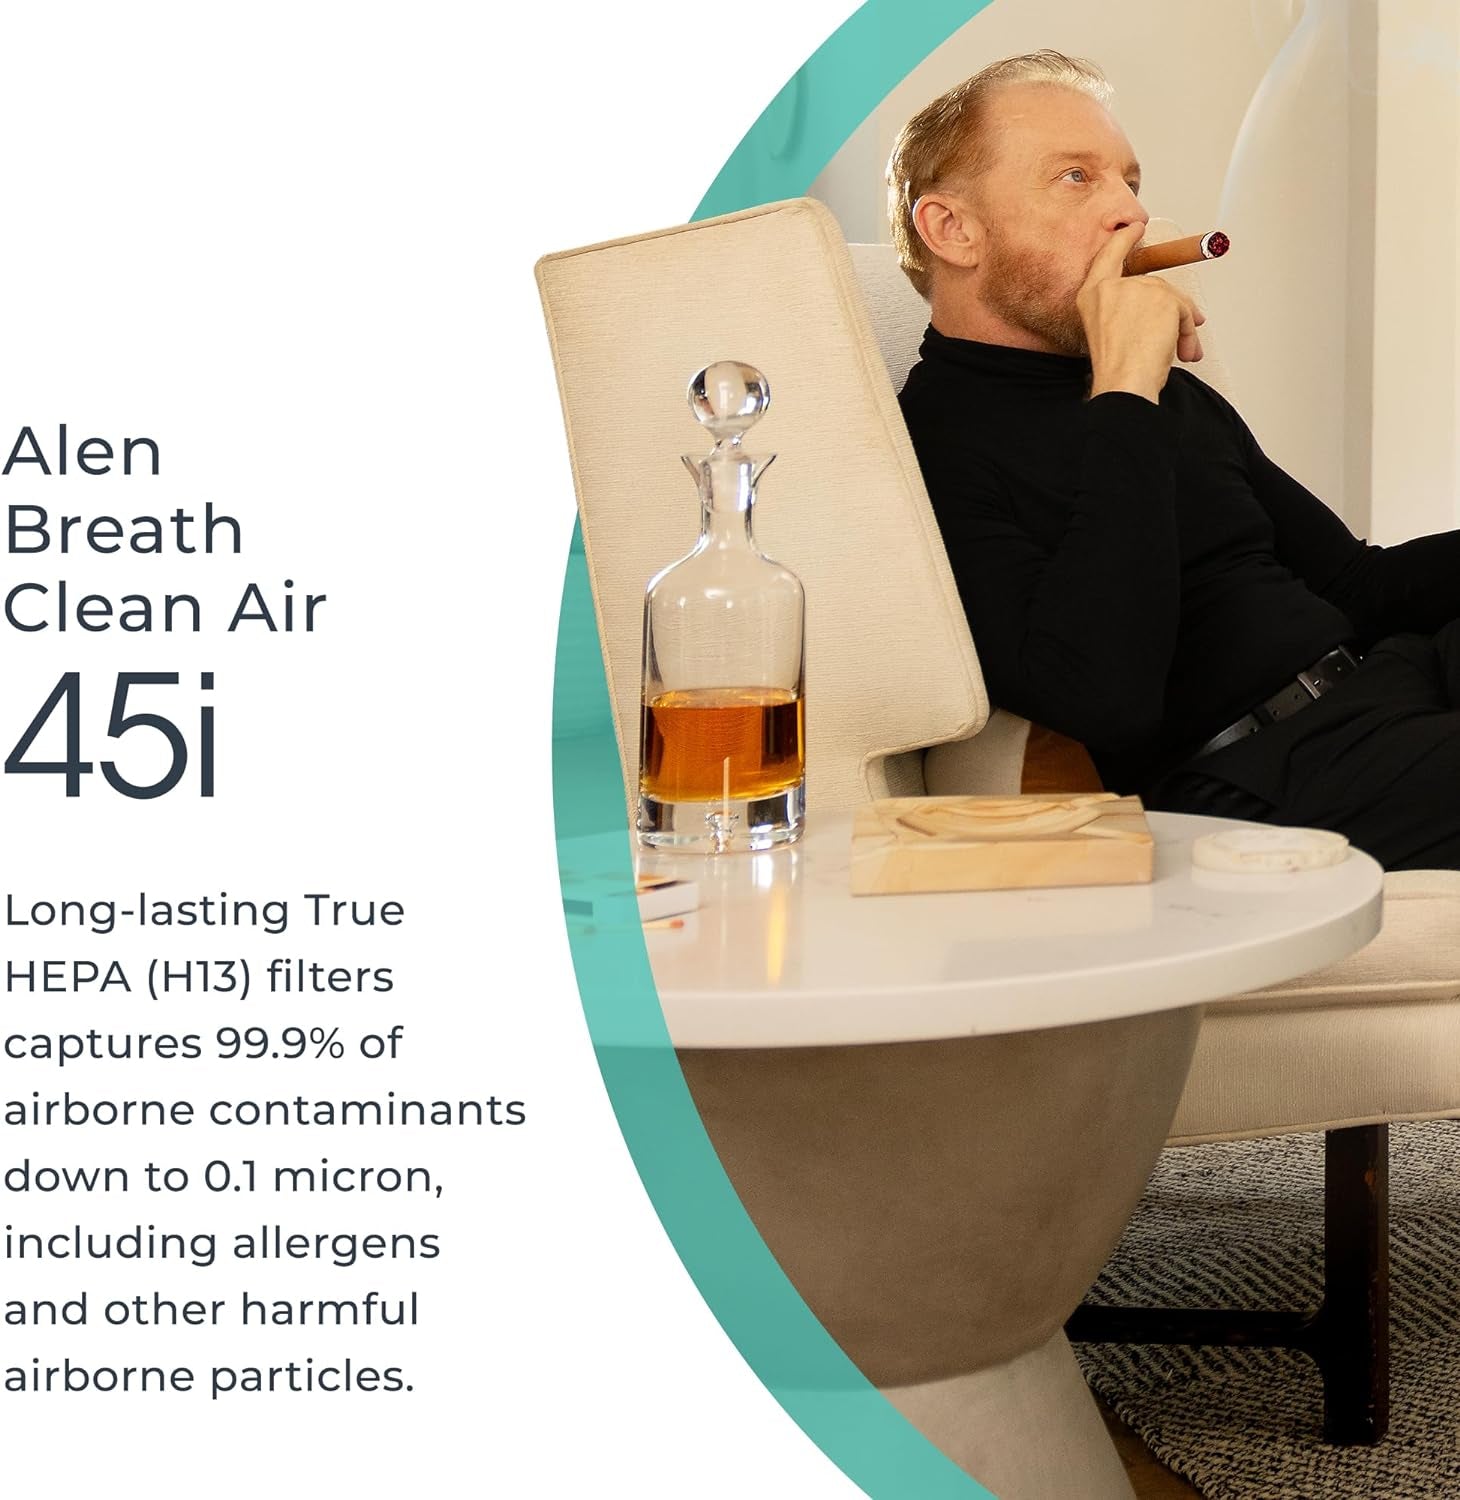 Air Purifier Breathesmart Flex HEPA W/ Voc/Smoke Filter - 1400 Sq. Ft - Perfect for Bedrooms - Captures Allergens, Dust, & Mold + Vocs & Smoke